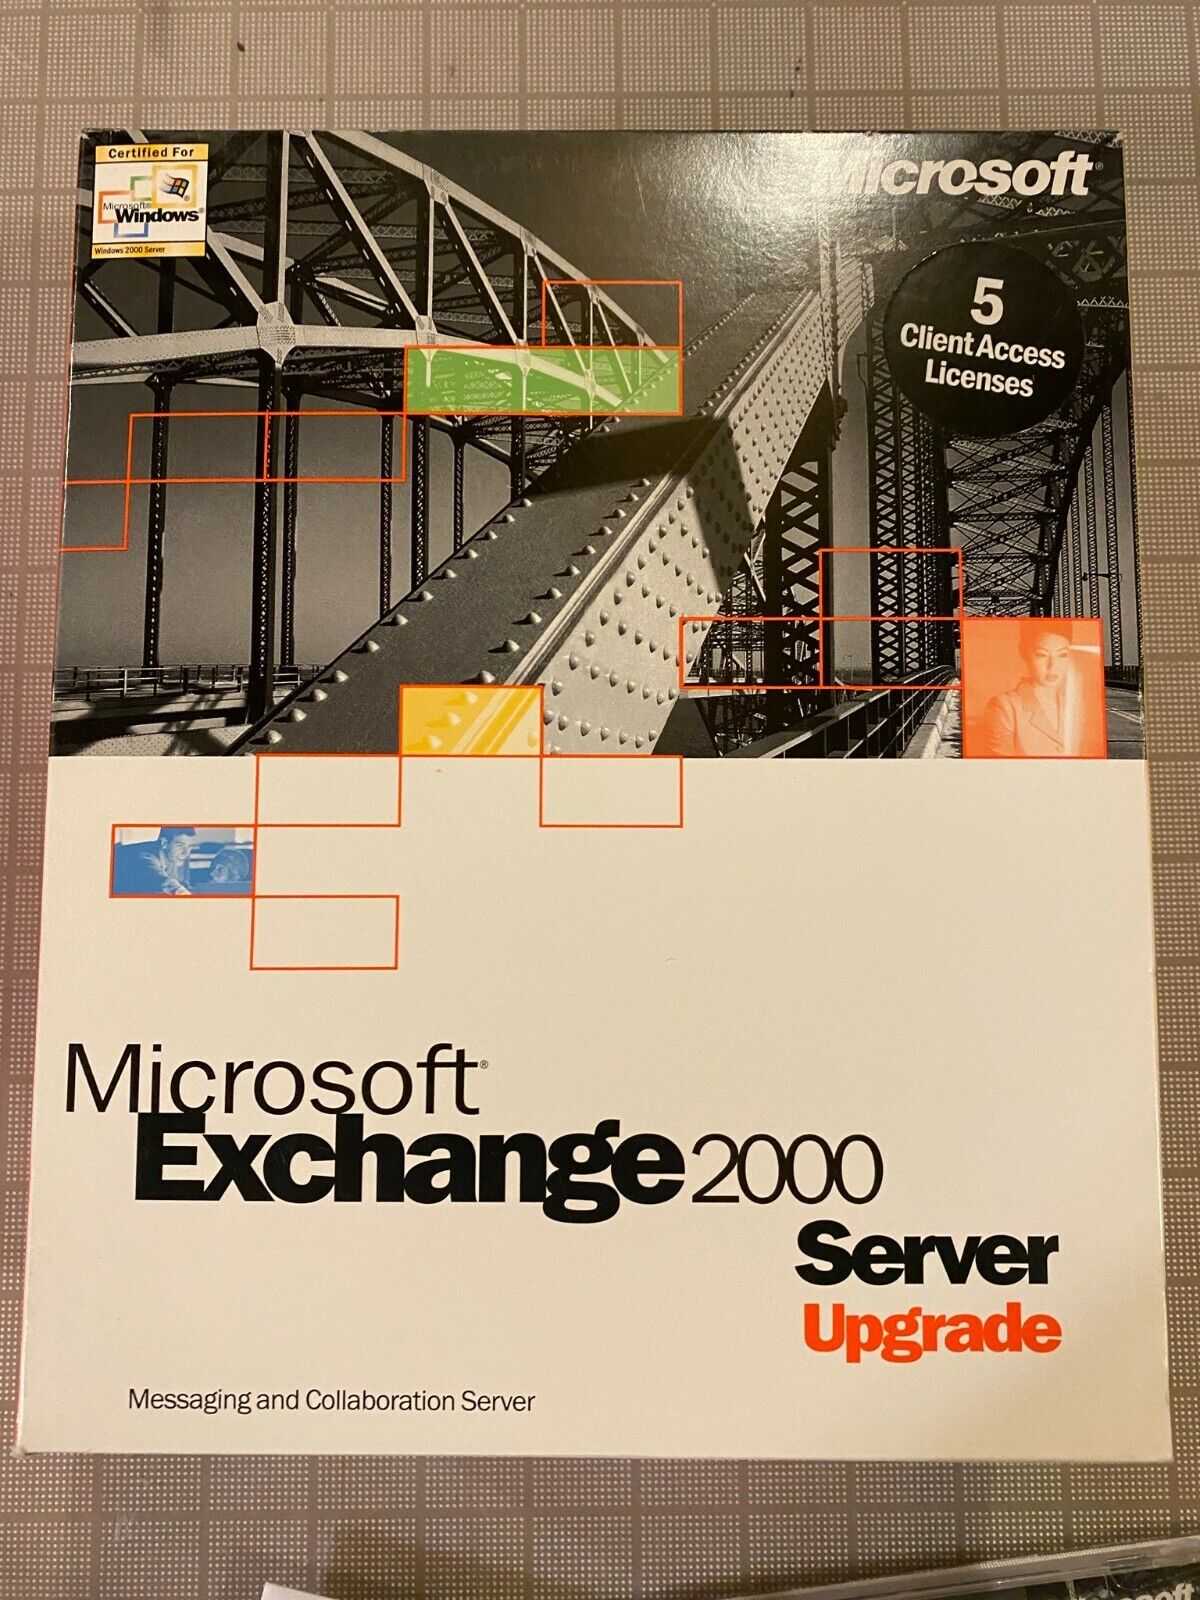 Microsoft Exchange 2000 Enterprise Server Upgrade w/5 CALs in Original Packaging